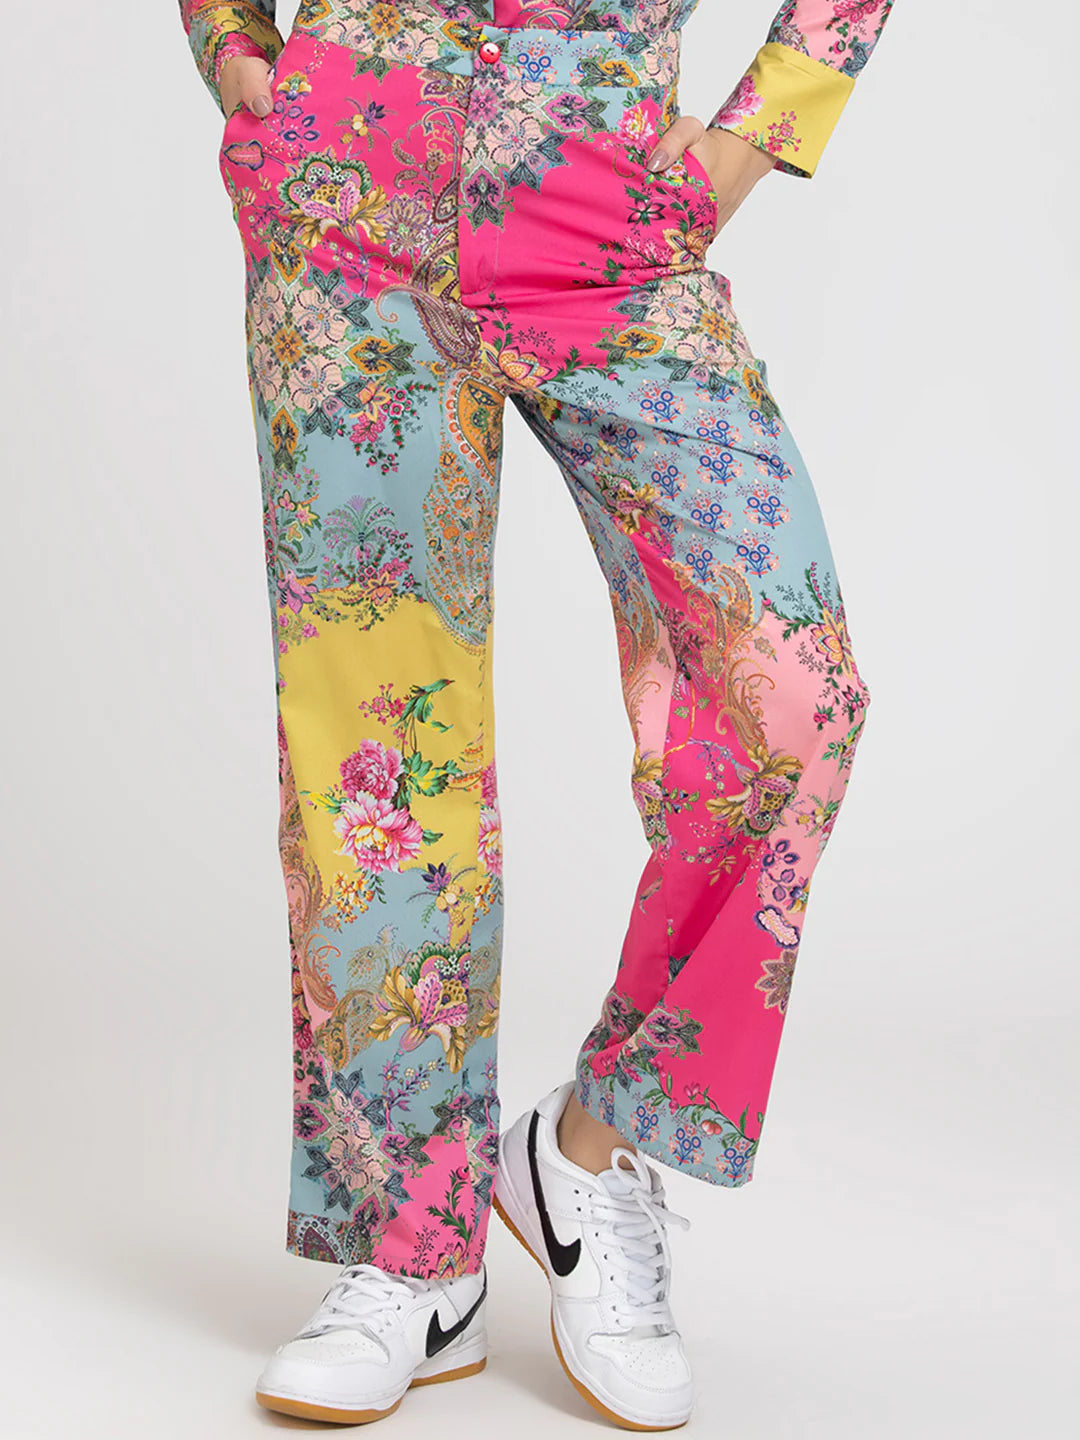 Retro Print Pants for Women | Retro Vibes Paisley Print Pants